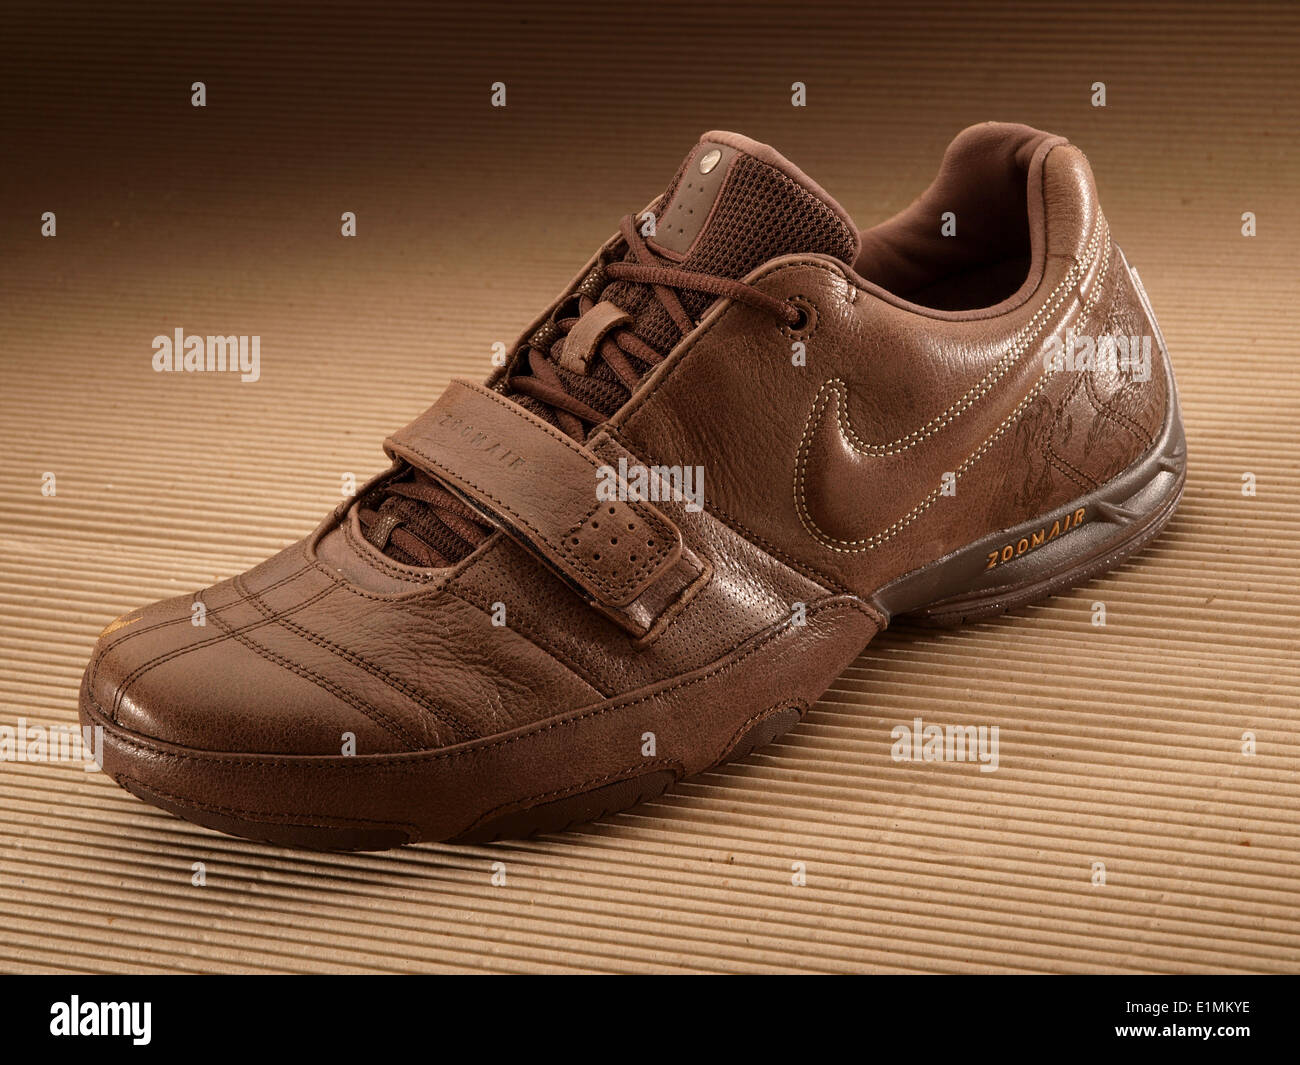 Chaussure de sport Nike zoomair brown Banque D'Images